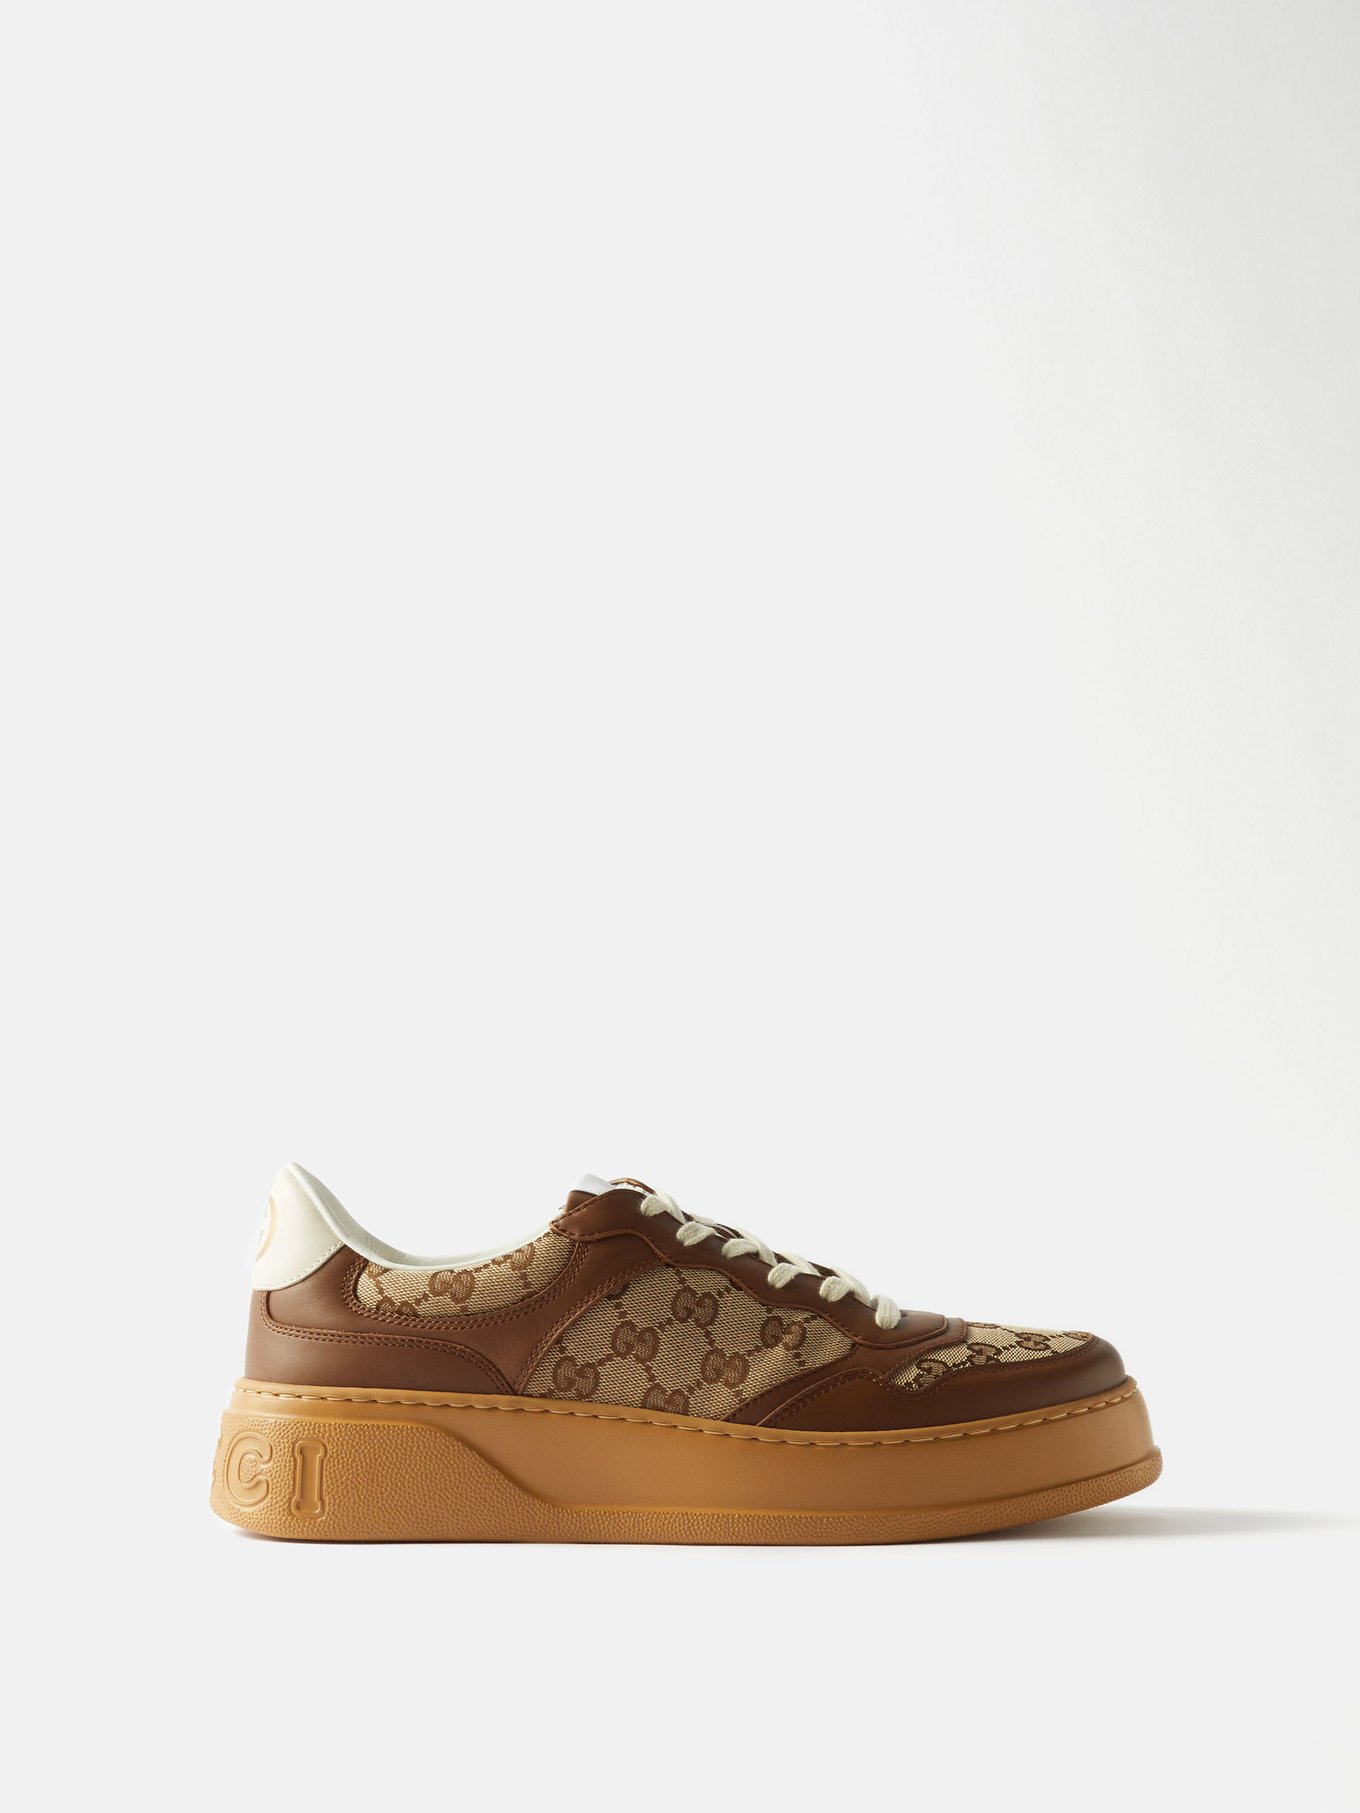 Gucci Monogram Sneakers in Brown